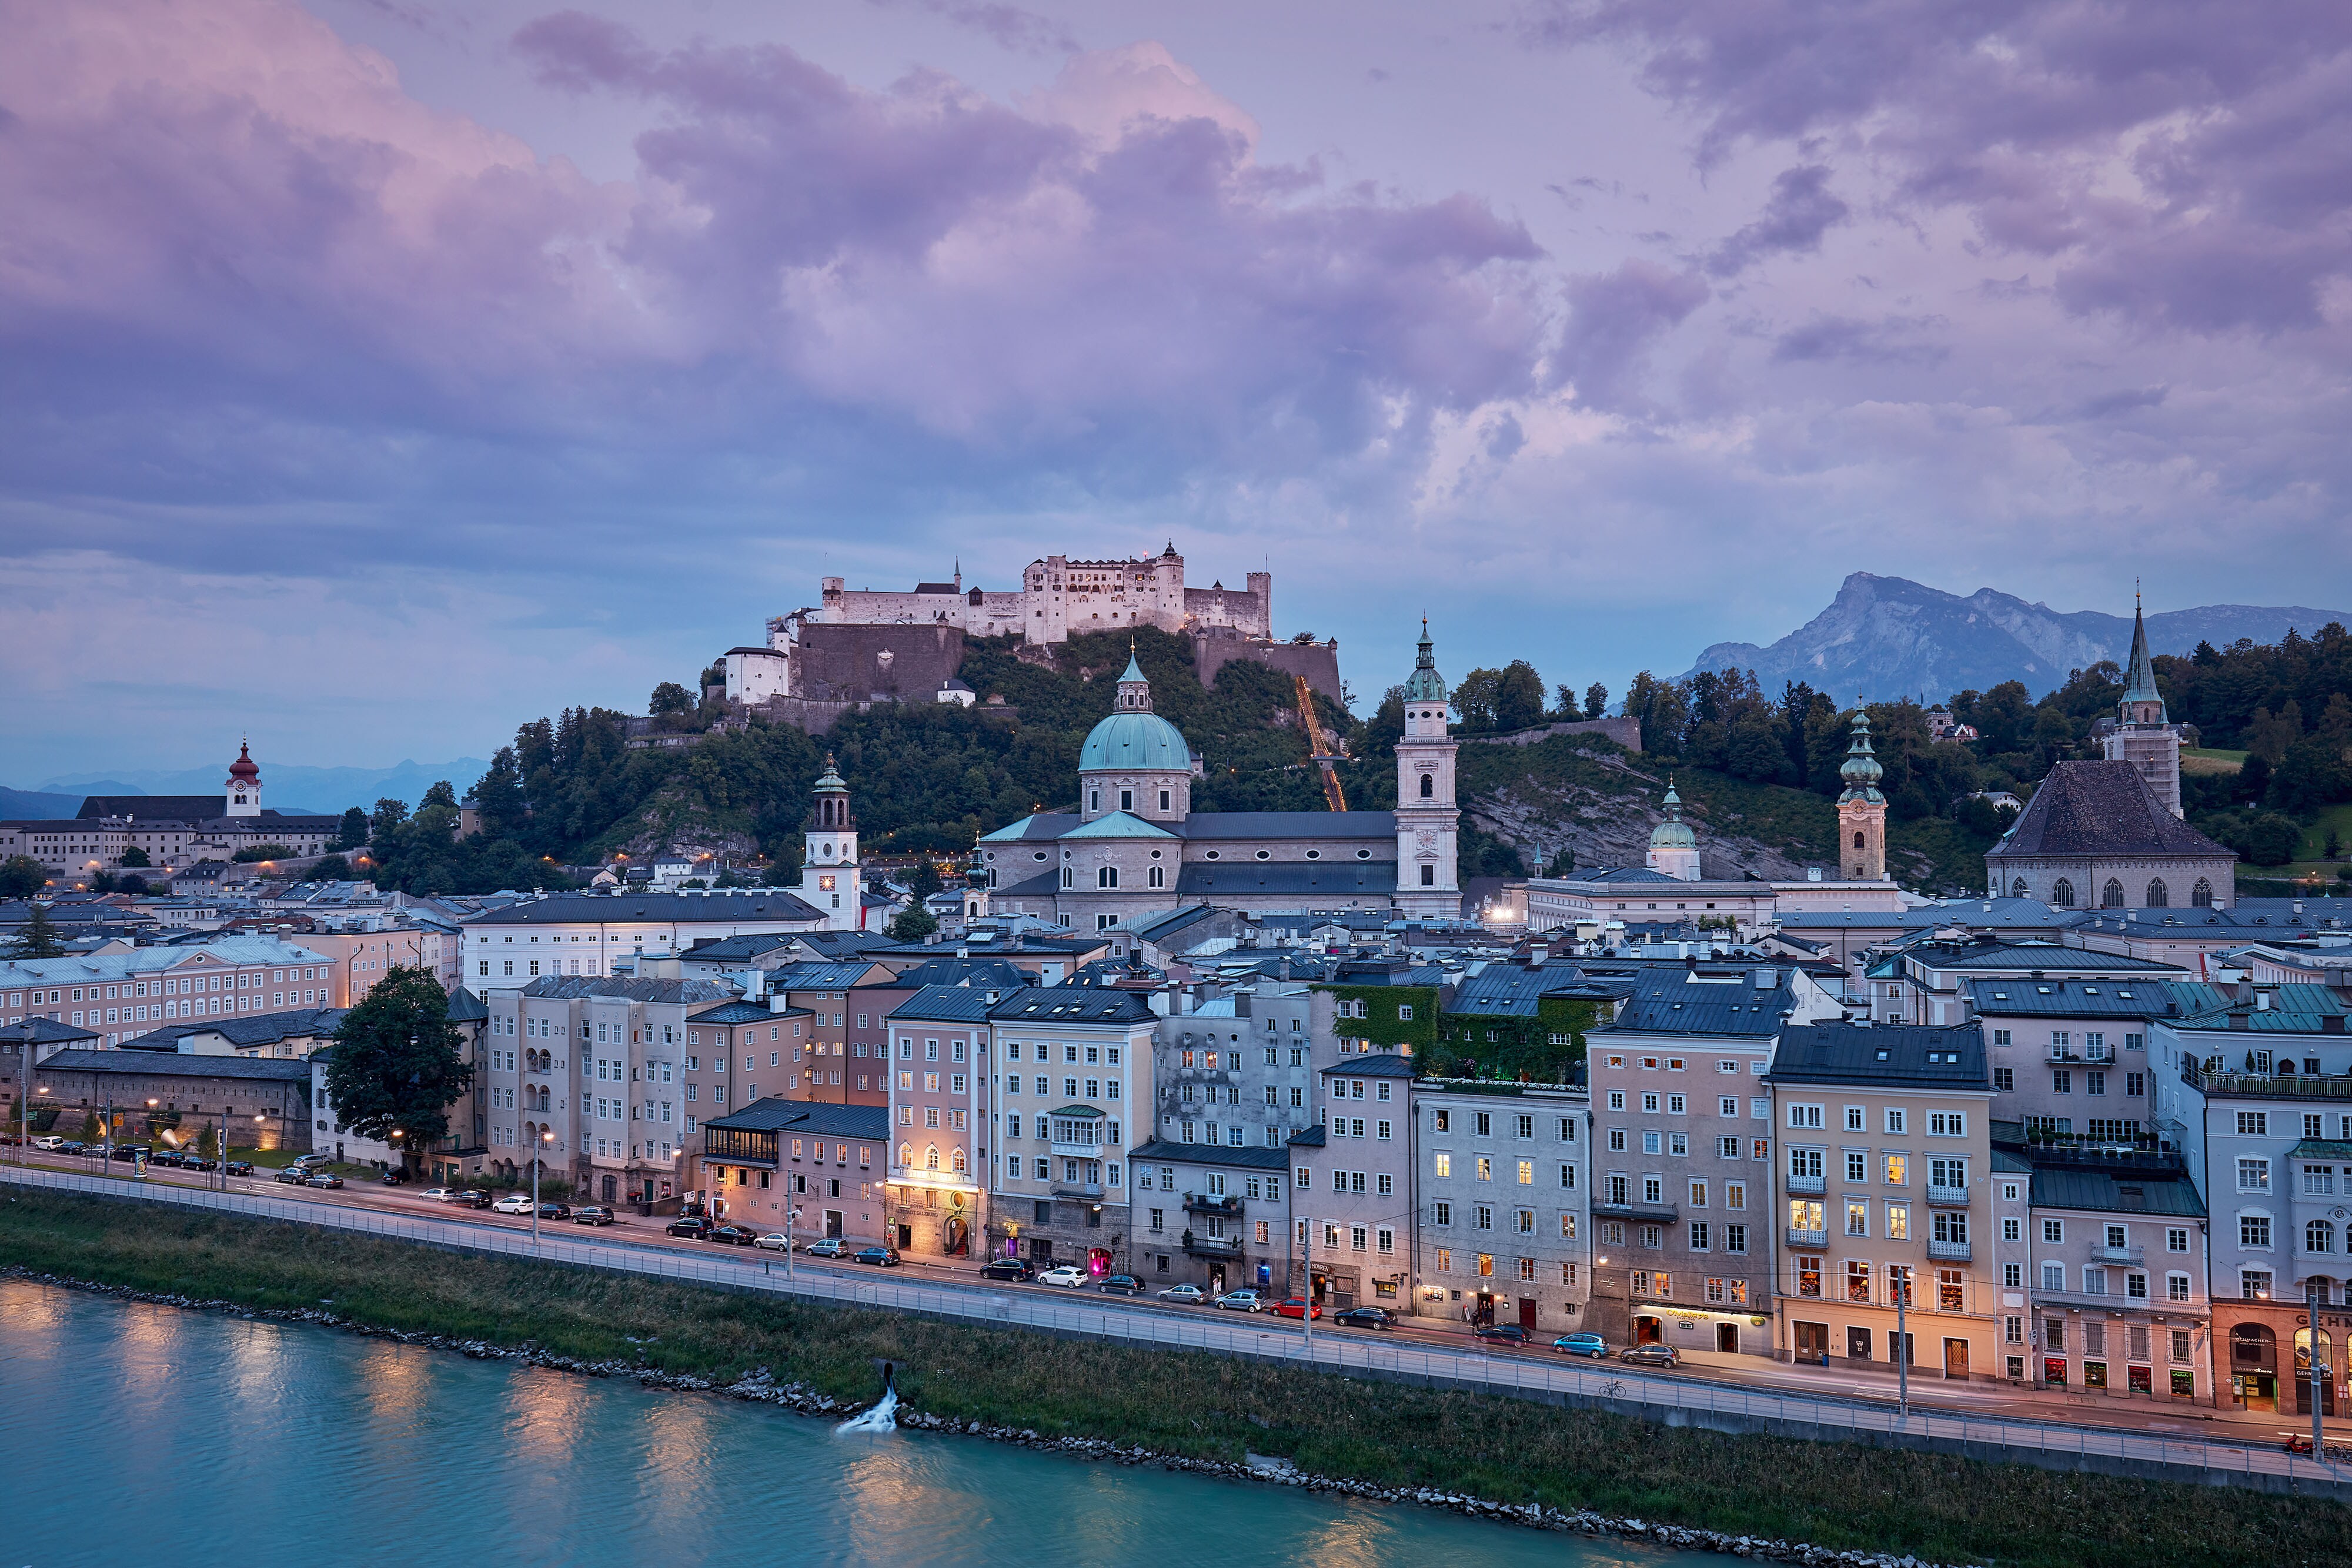 Historic City Center Of Salzburg